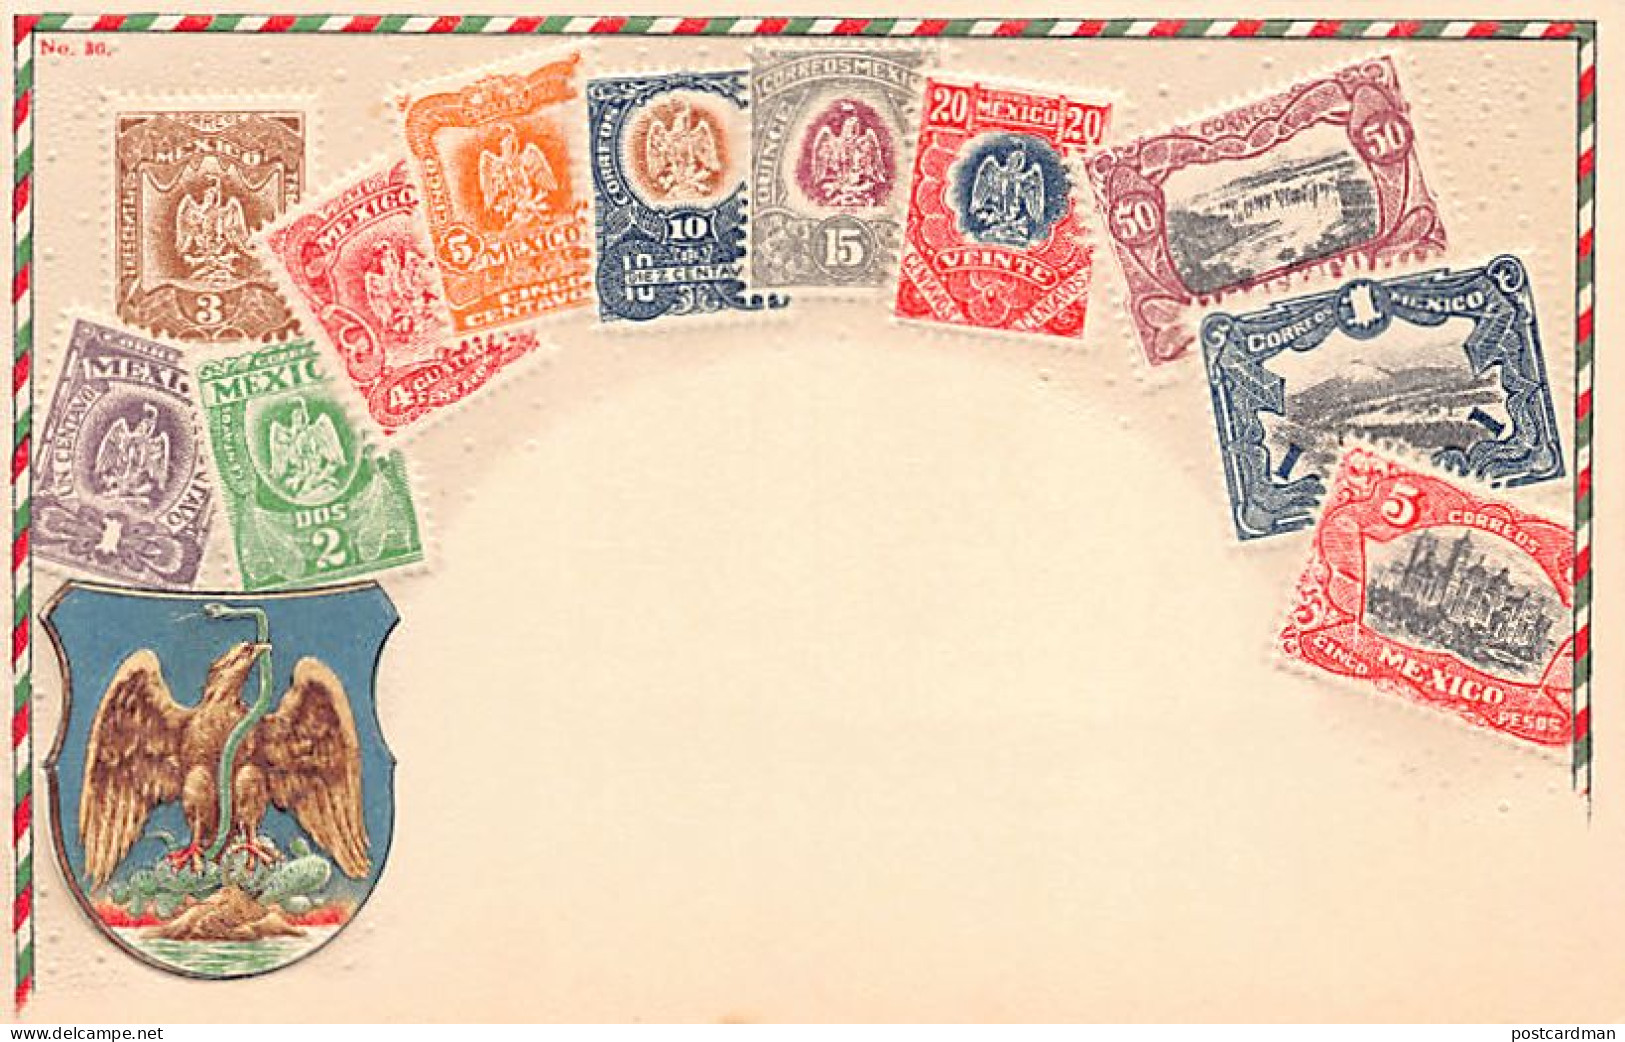 México - Philatelic Postcard - Postal Filatélica - Ed. Desconocido  - Mexico